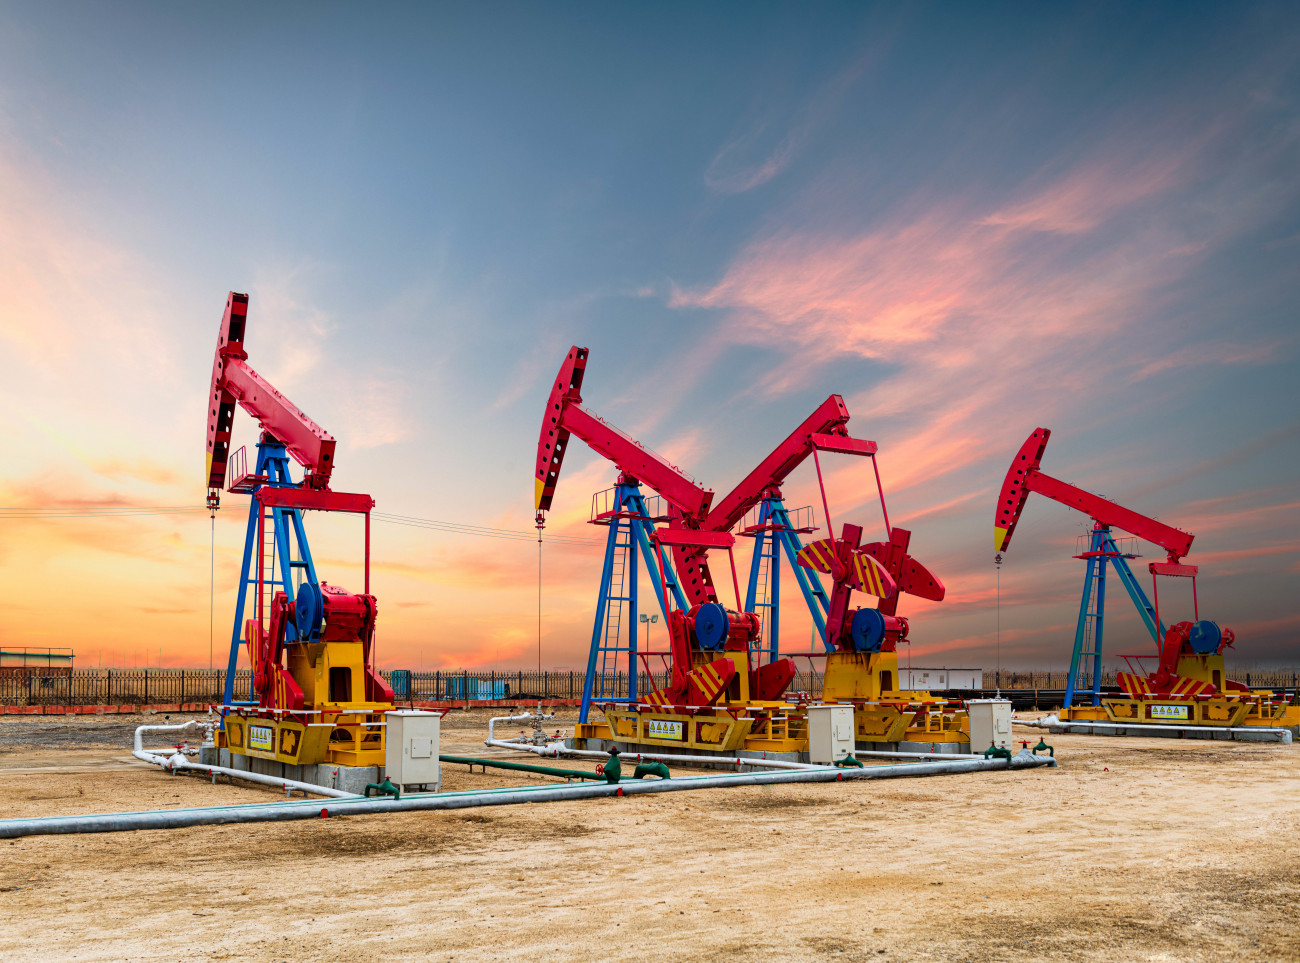 Slika oljnih crpalk v naftni industriji ter opreme za vrtanje